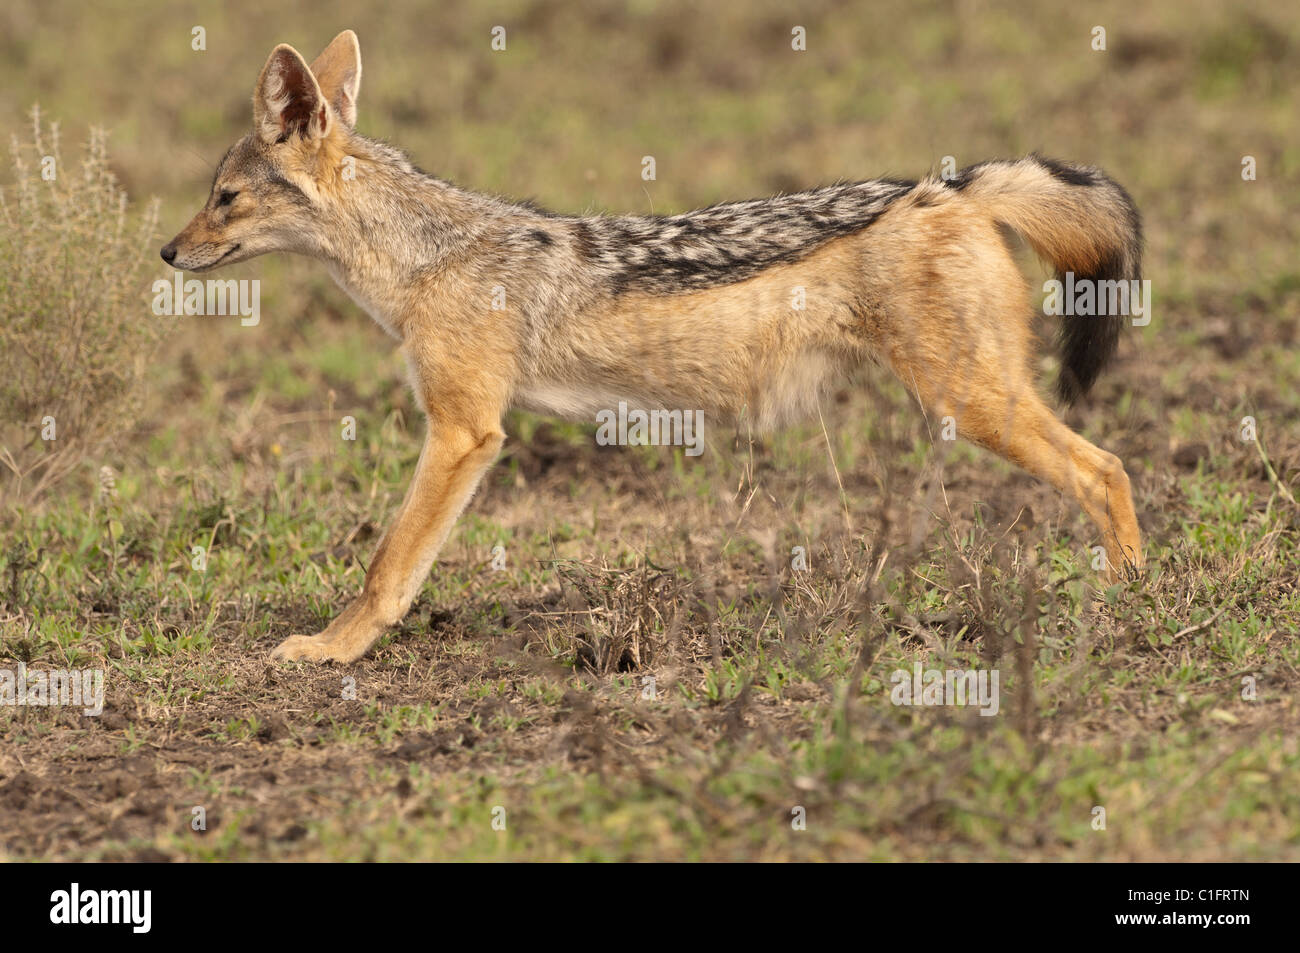 Stock photo of a blacke backed jackal stretching. Stock Photo